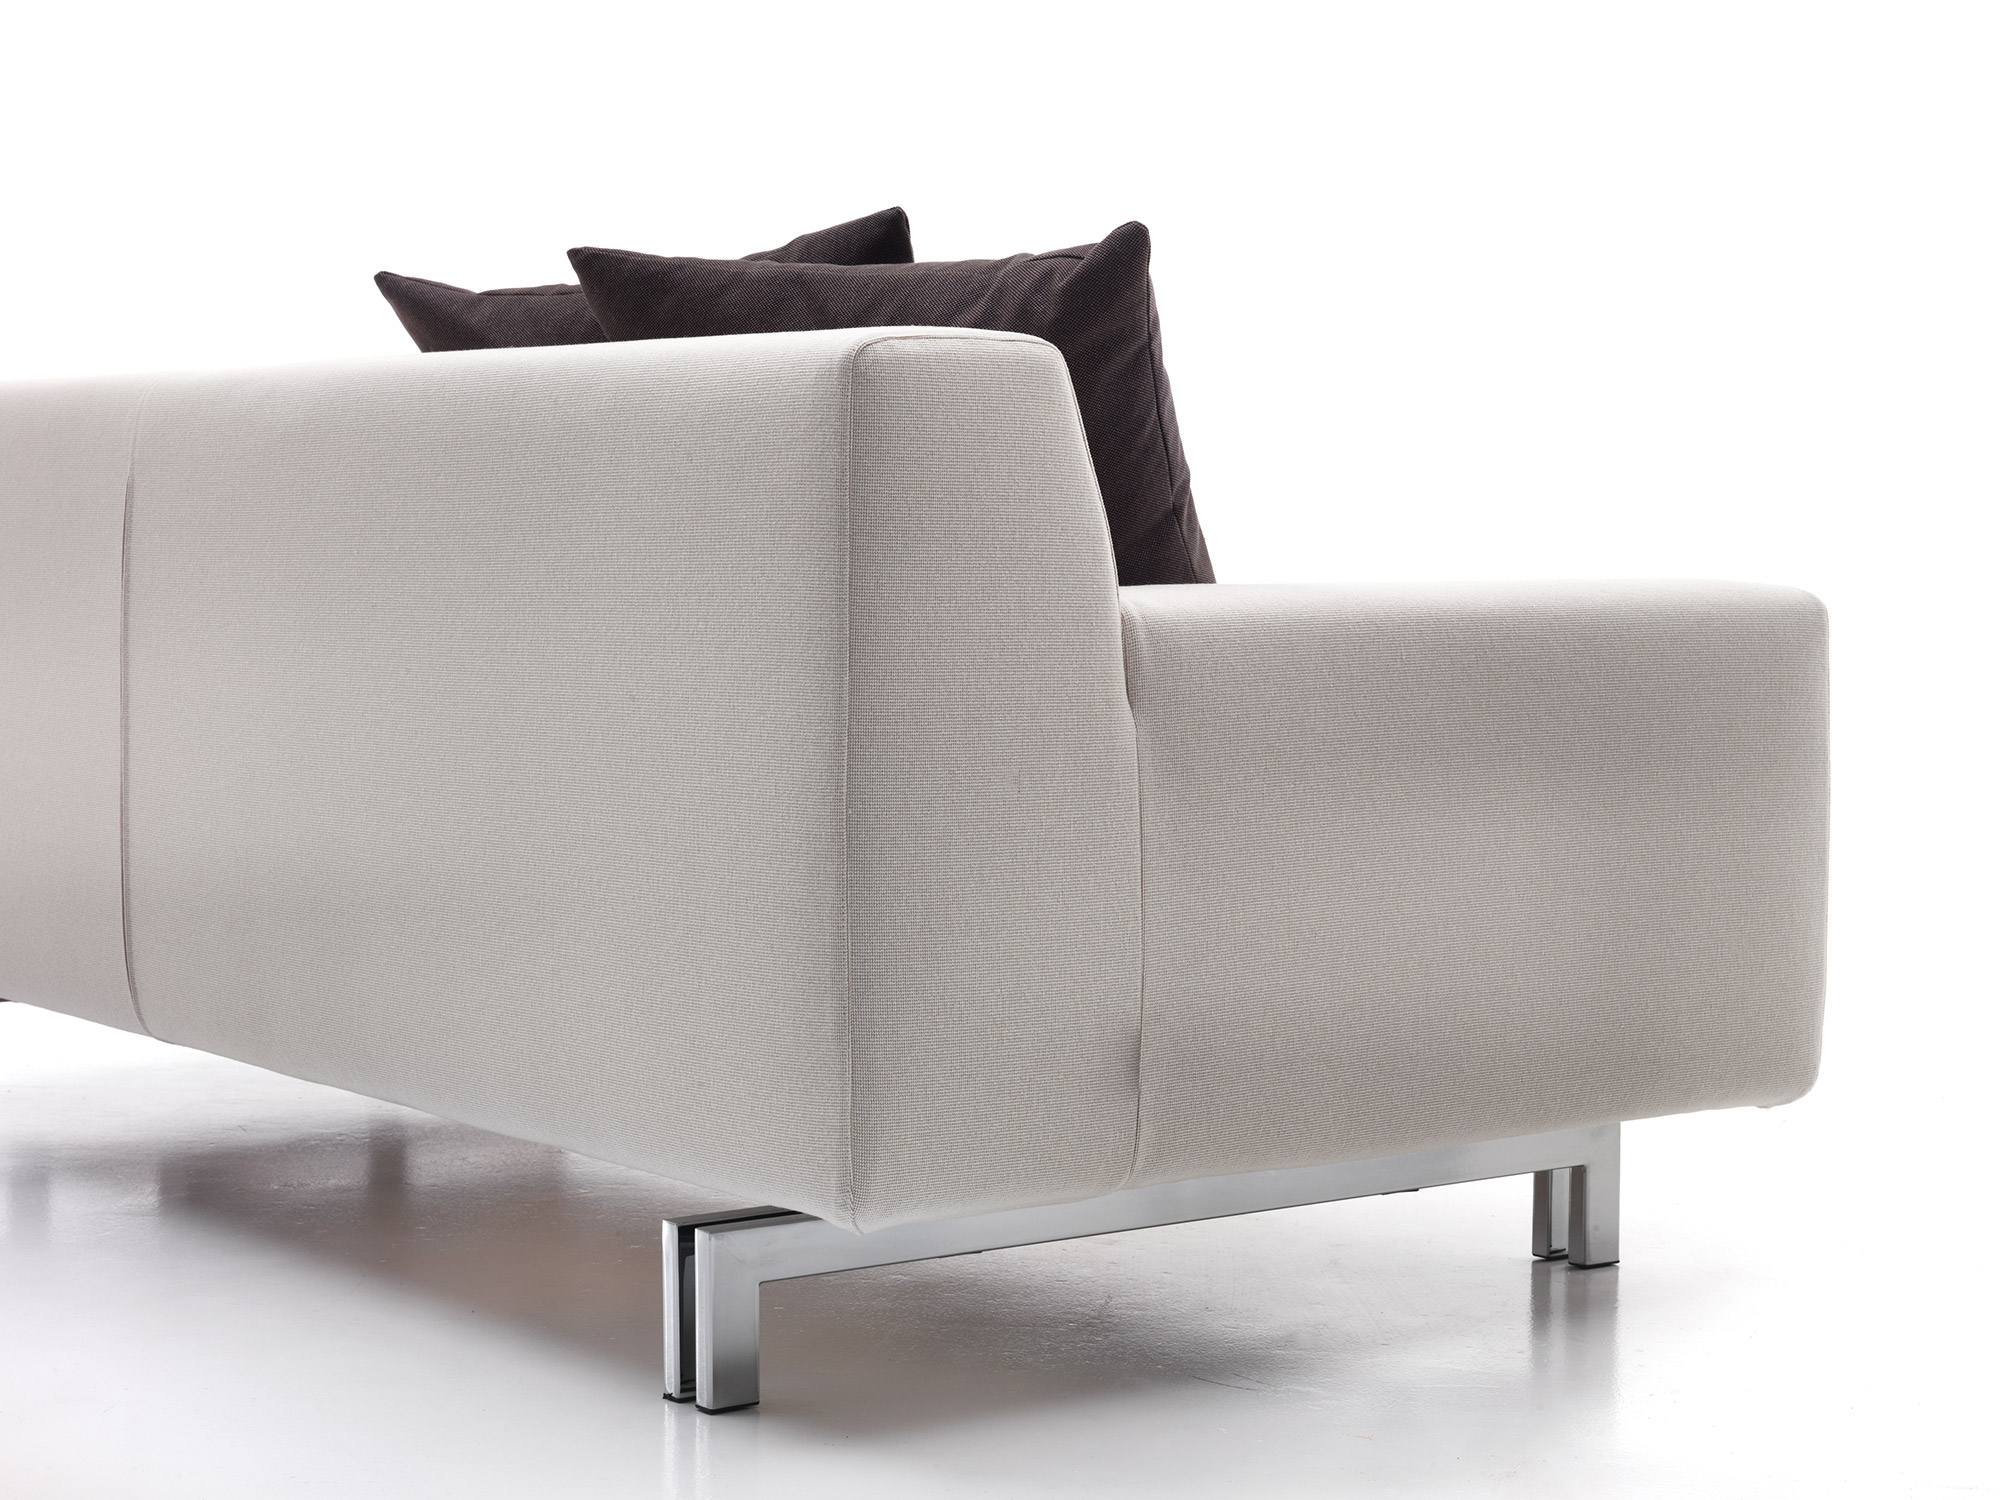 Mussi Alexander sofa armrest ad foot detail